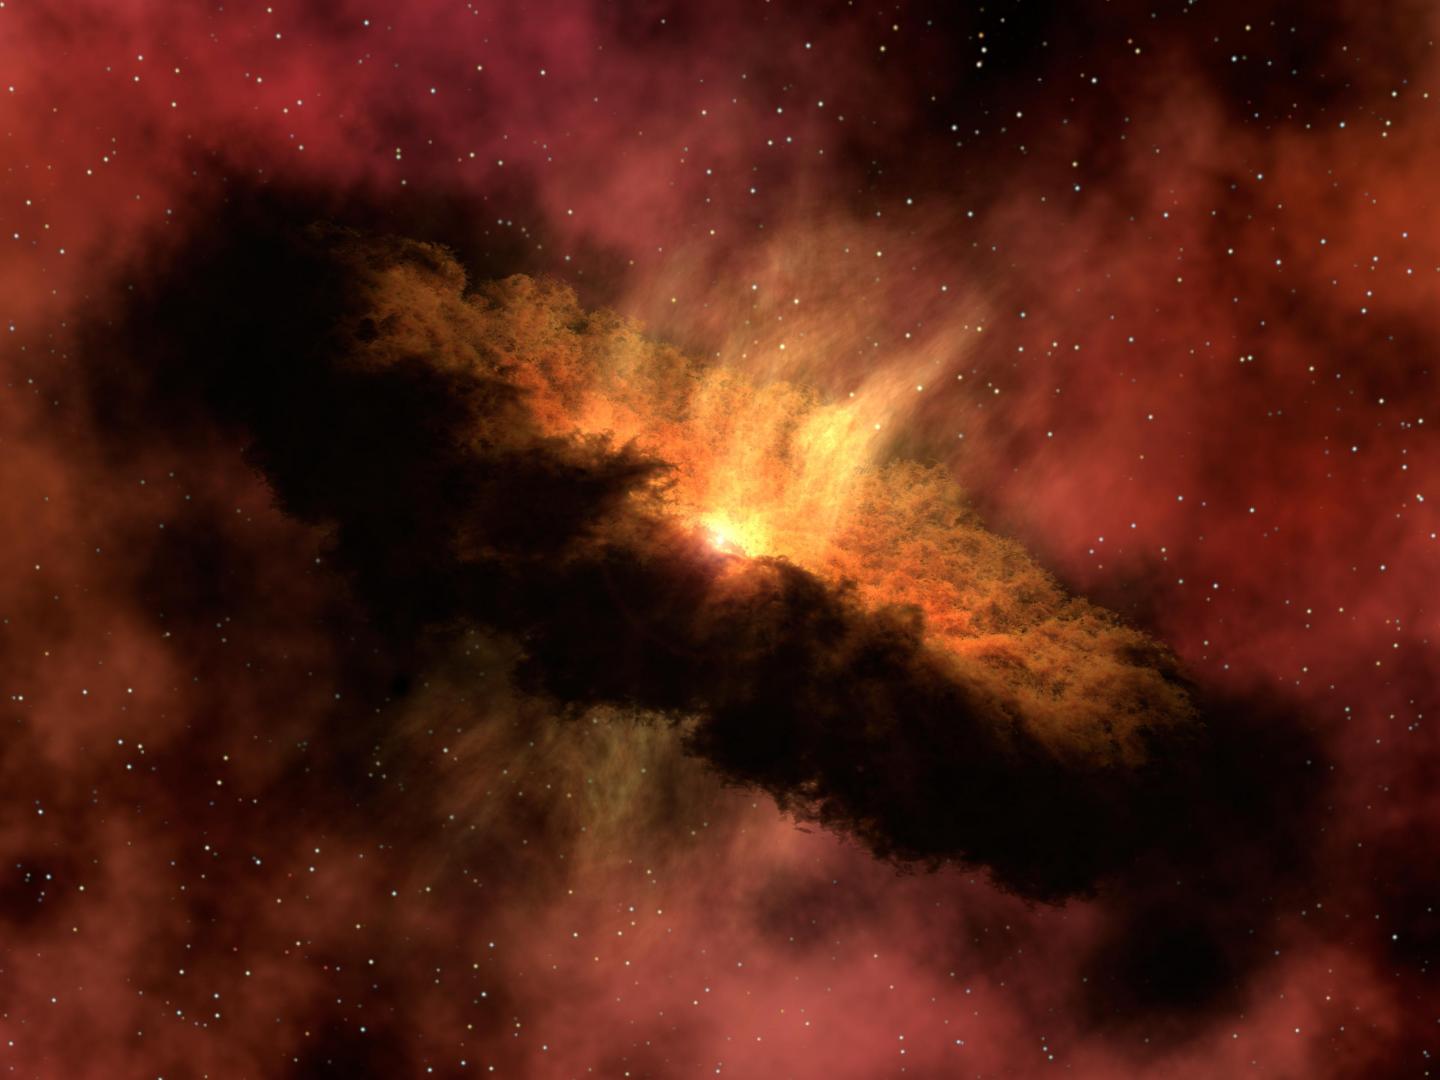 Artistic depiction of the solar nebula